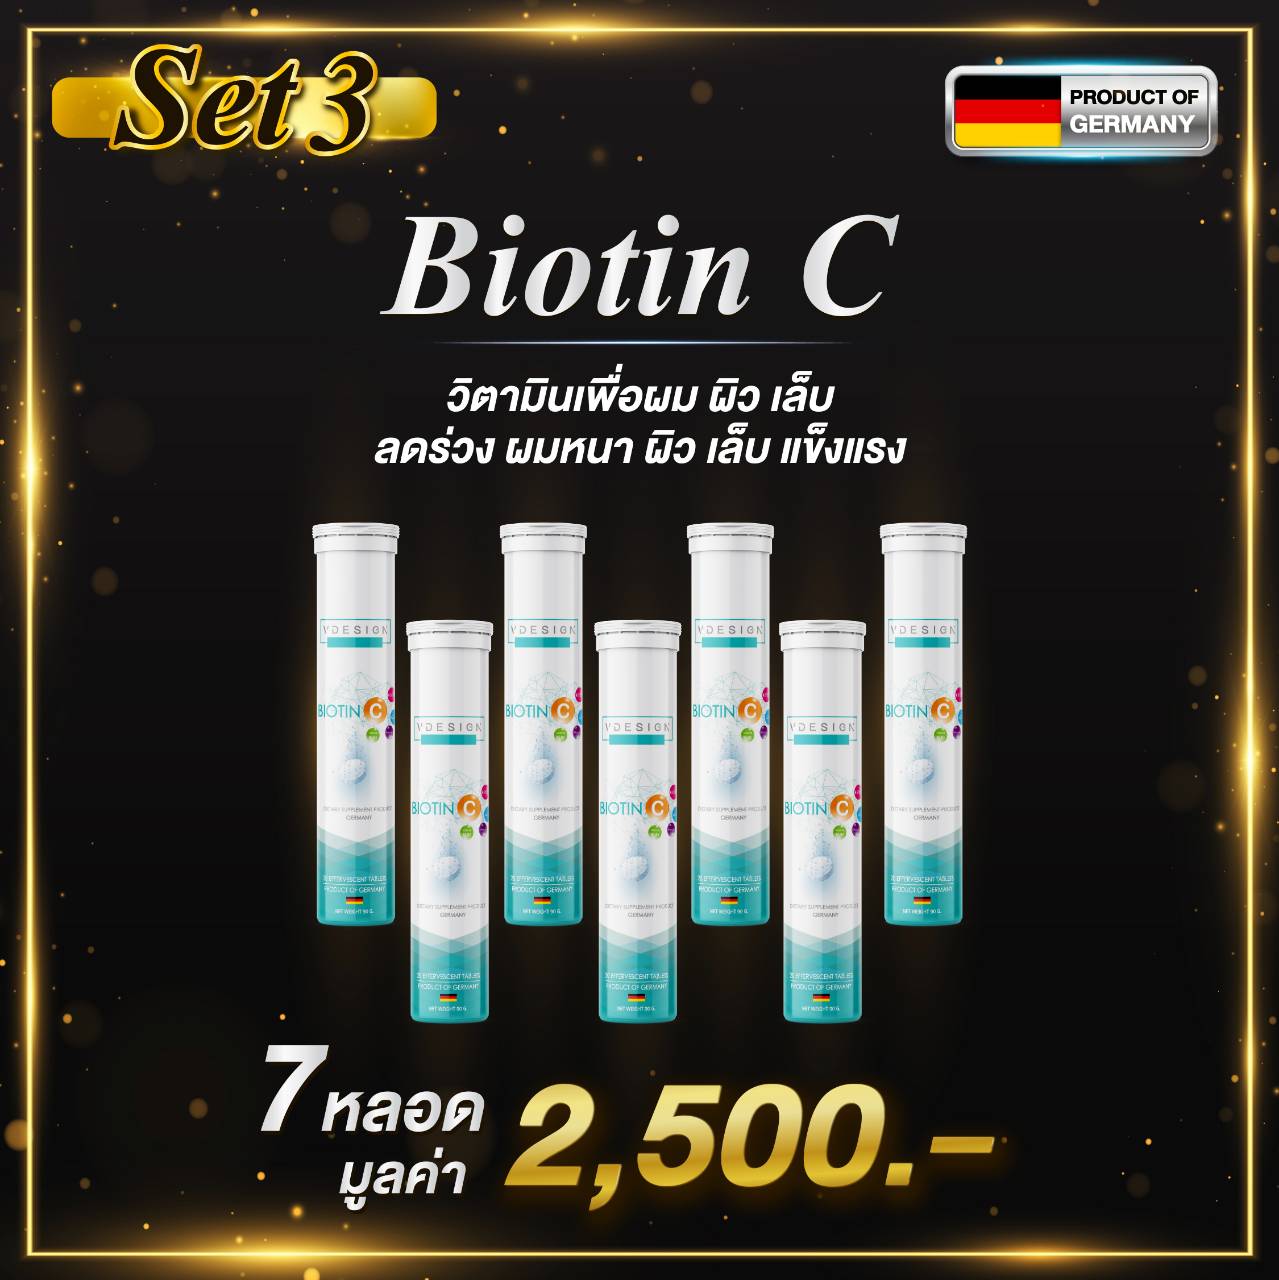 Set 3 Biotin C